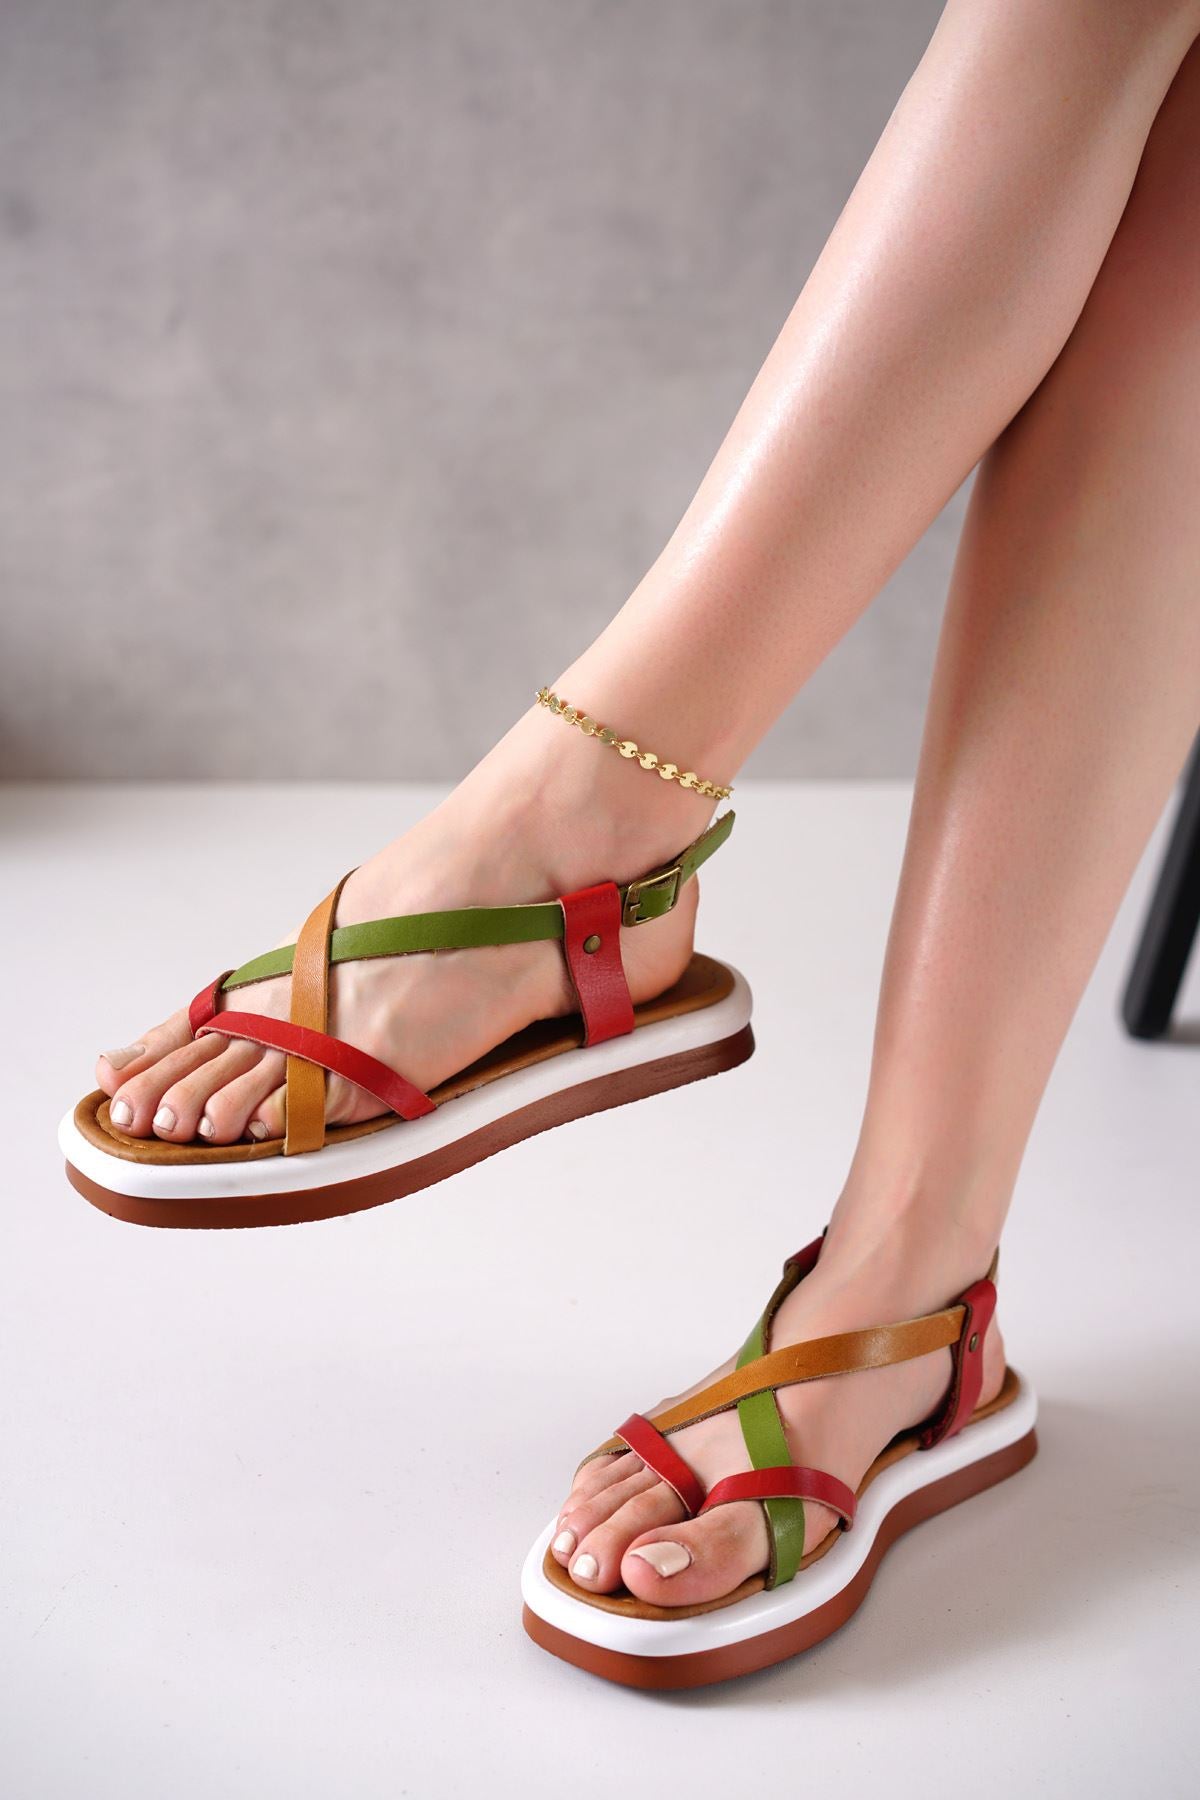 Alaçatı Genuine Leather Brown Red Green Women's Sandals - STREETMODE ™